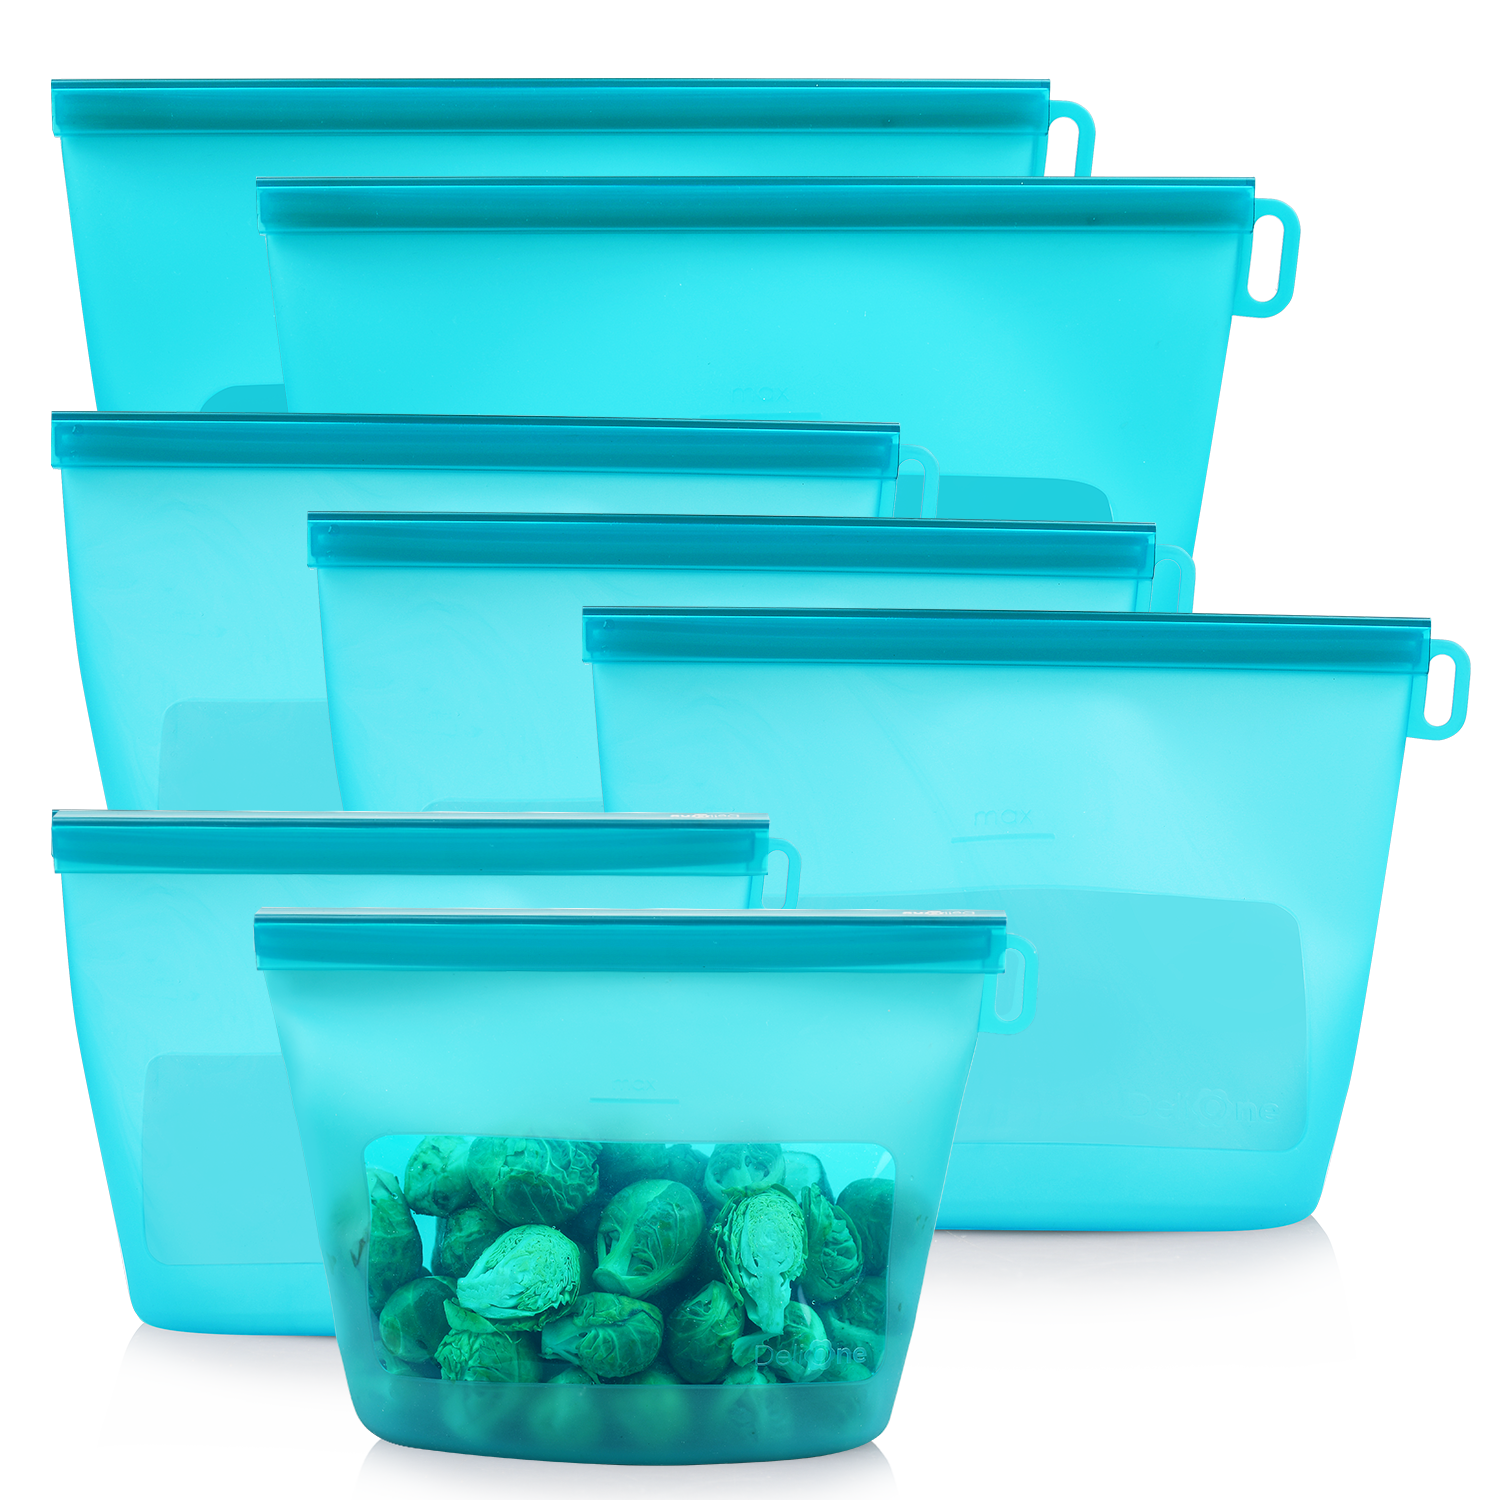 Delione Zip'n Fresh Silicone Food Storage Bag Set of 3 / Coral